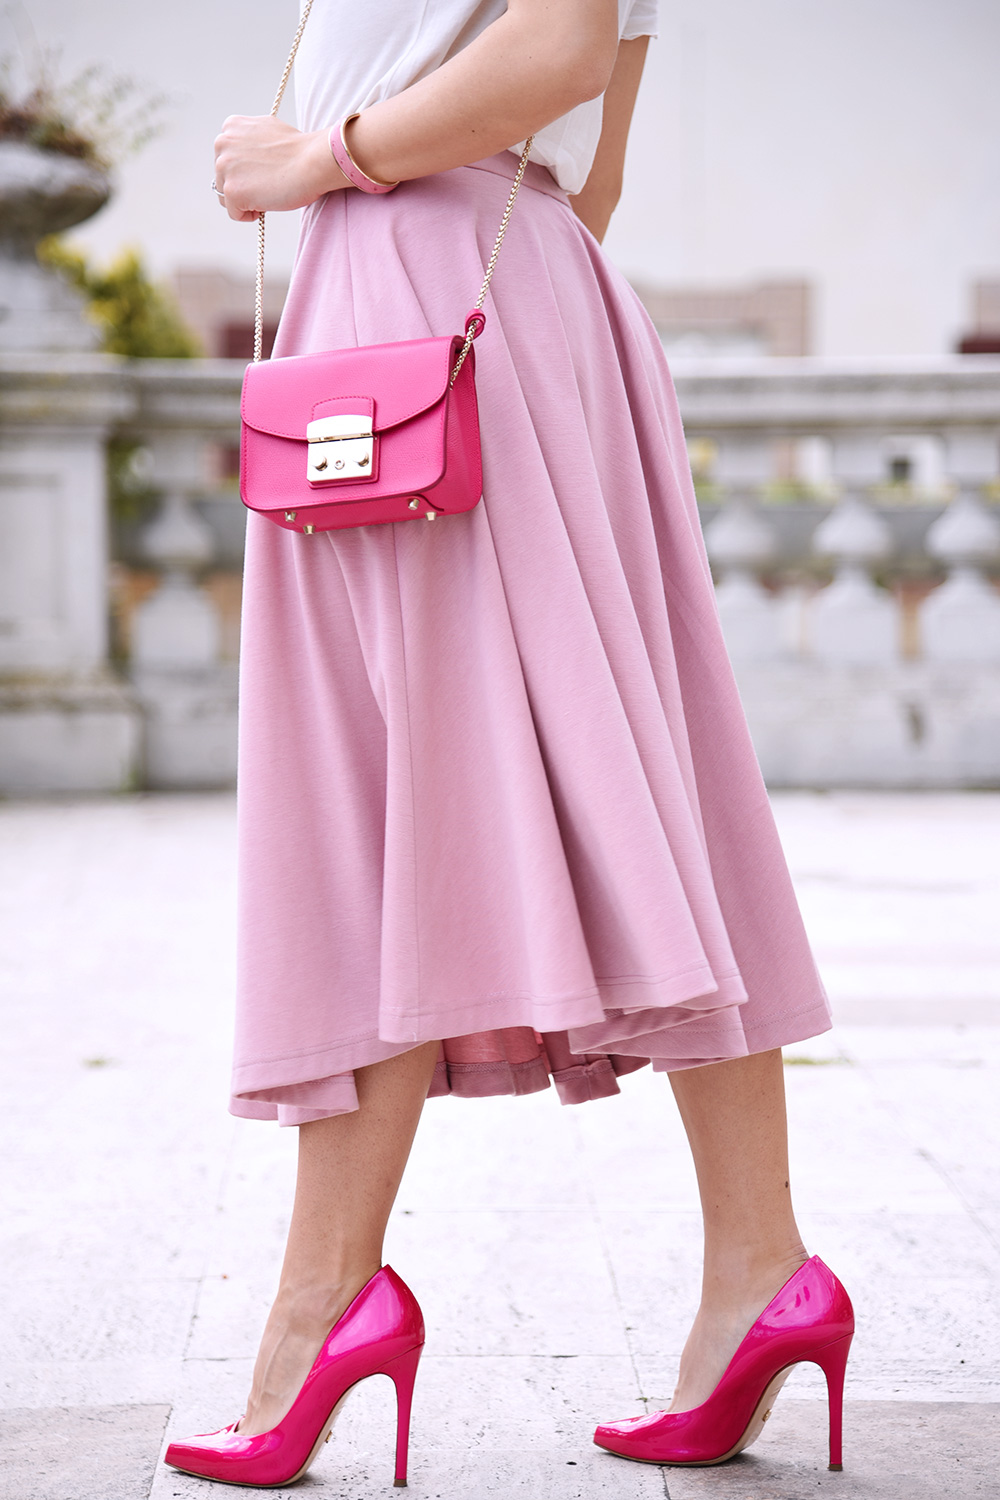 Shabby apple dresses and skirts, Yo limited t-shirt, metropolis Furla, borse Furla, Furla mini bag - outfit primavera 2015 fashion blogger It-Girl by Eleonora Petrella